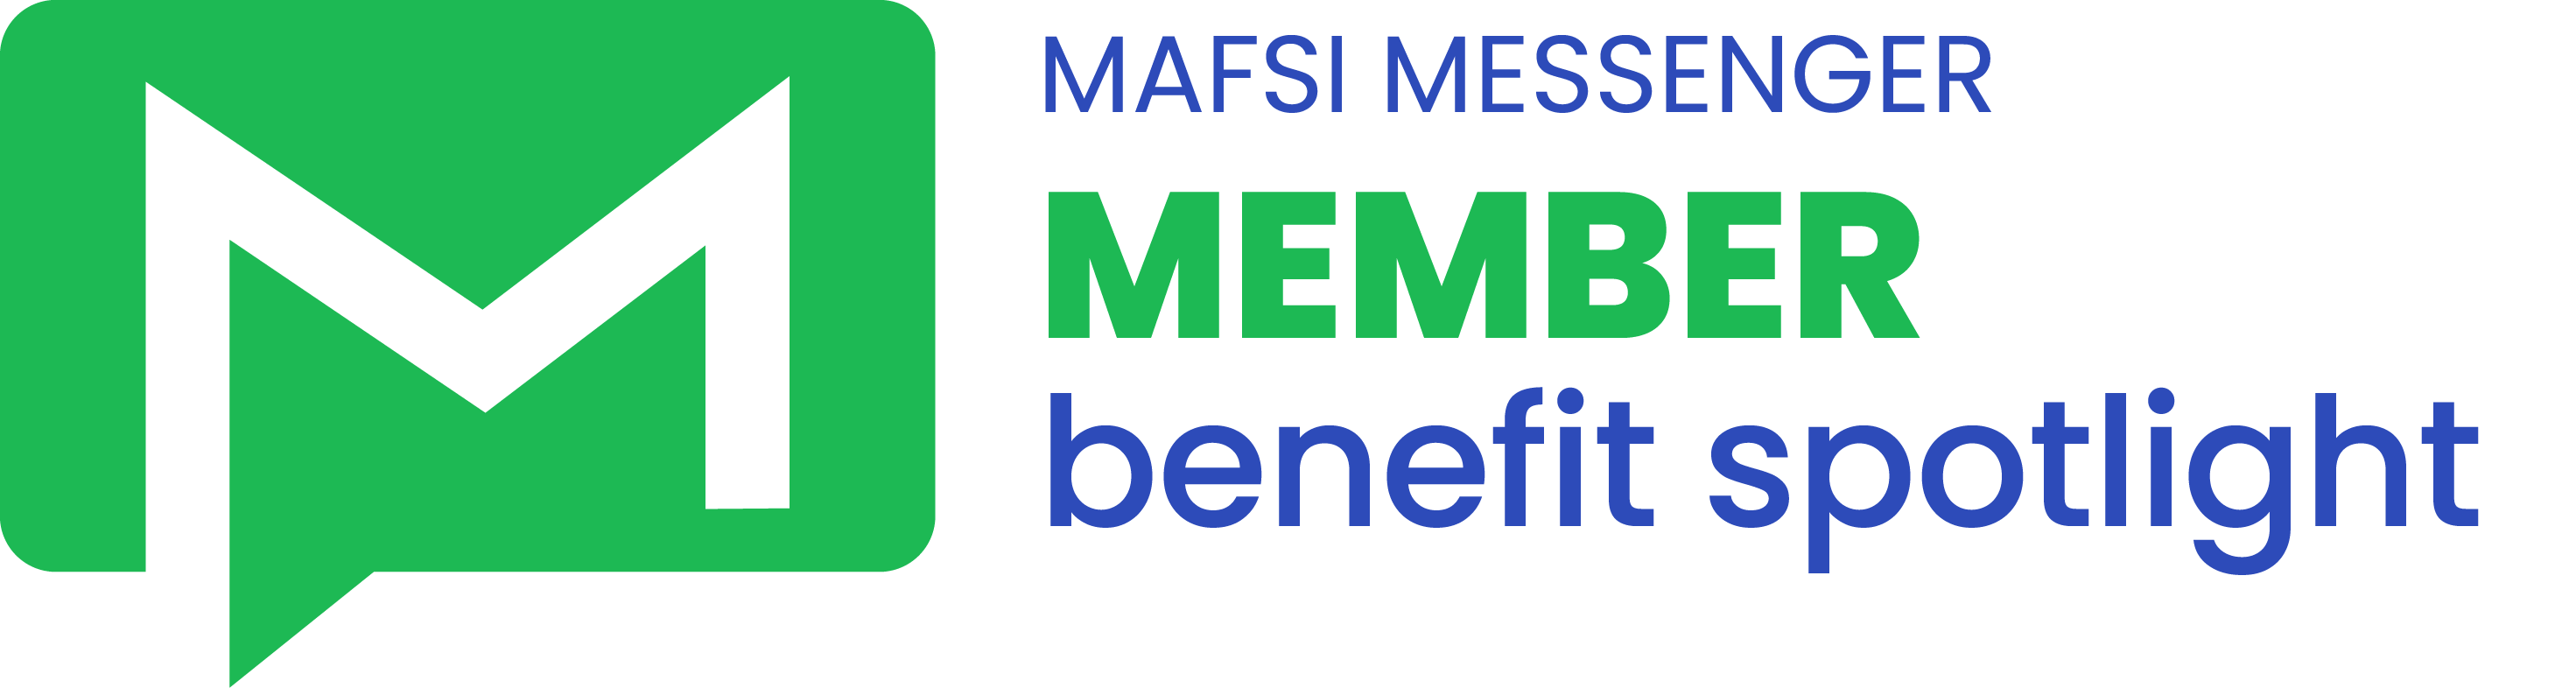 Mafsi Messenger Blog Banners v4 committee revised Tight to Artboards_MAFSI messenger Member Benefits Spotlight